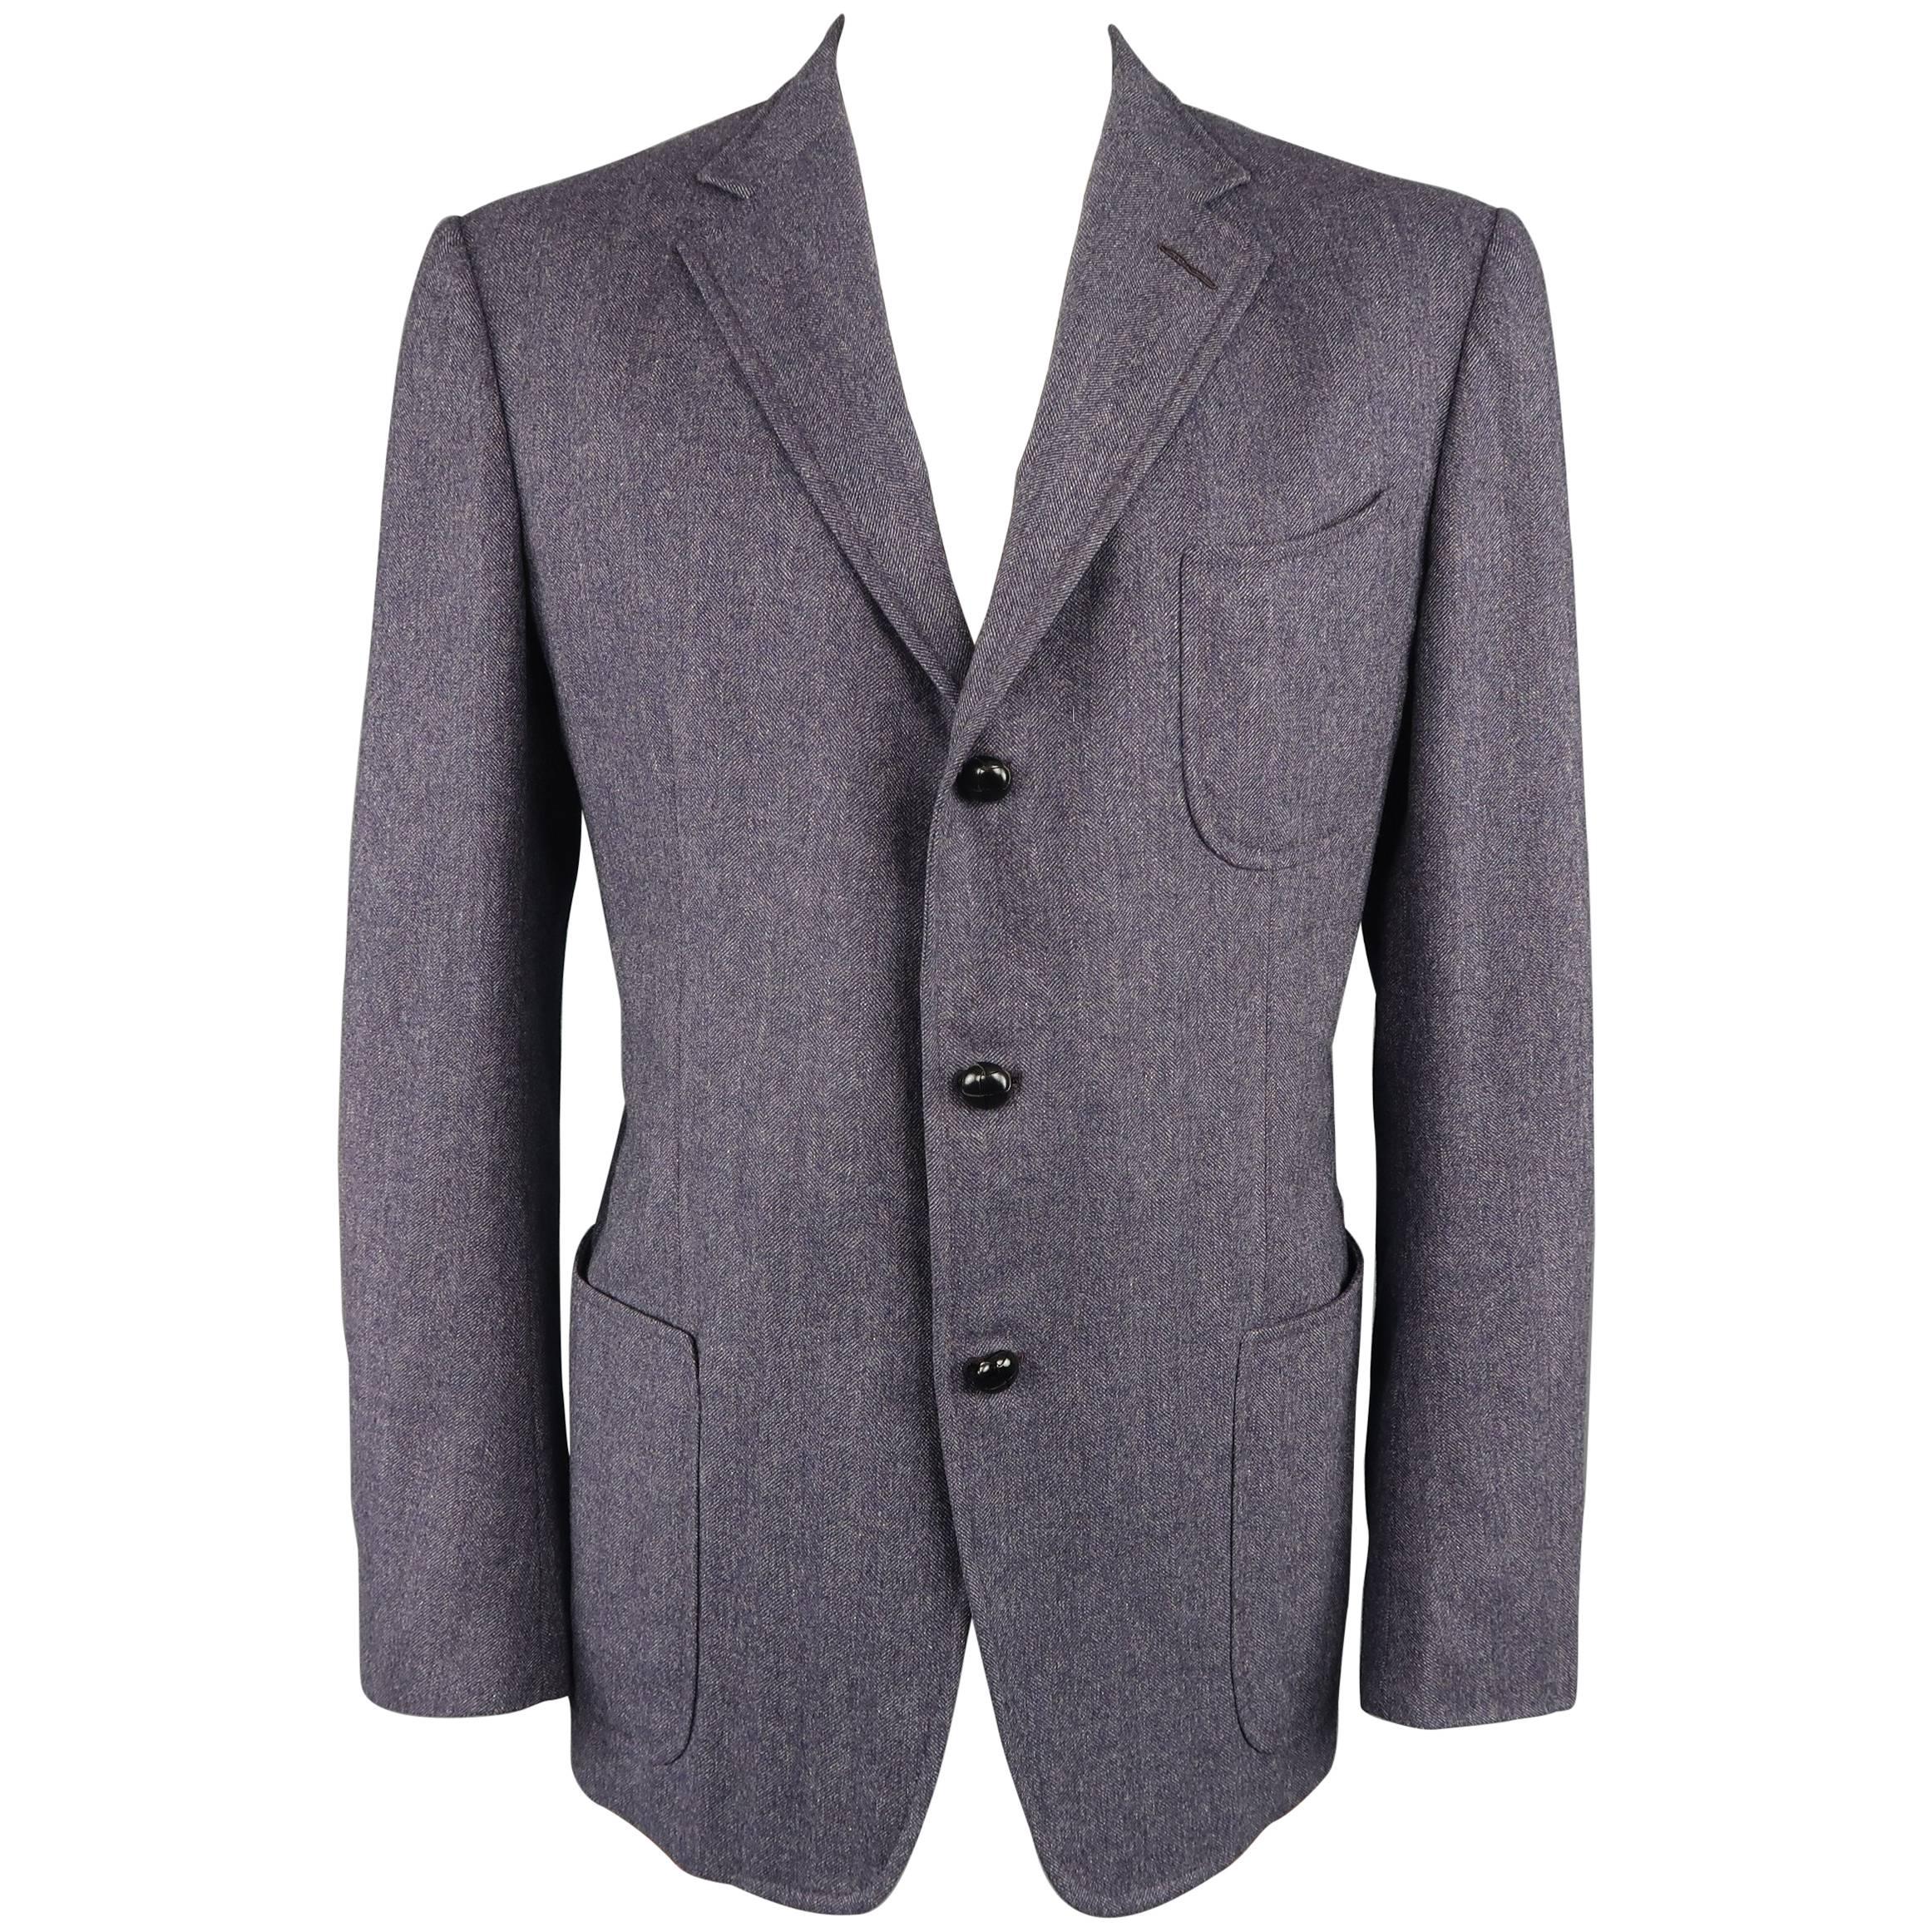 Tom Ford Sport Coat - Men's Light Purple Wool / Cashmere Jacket / Blazer